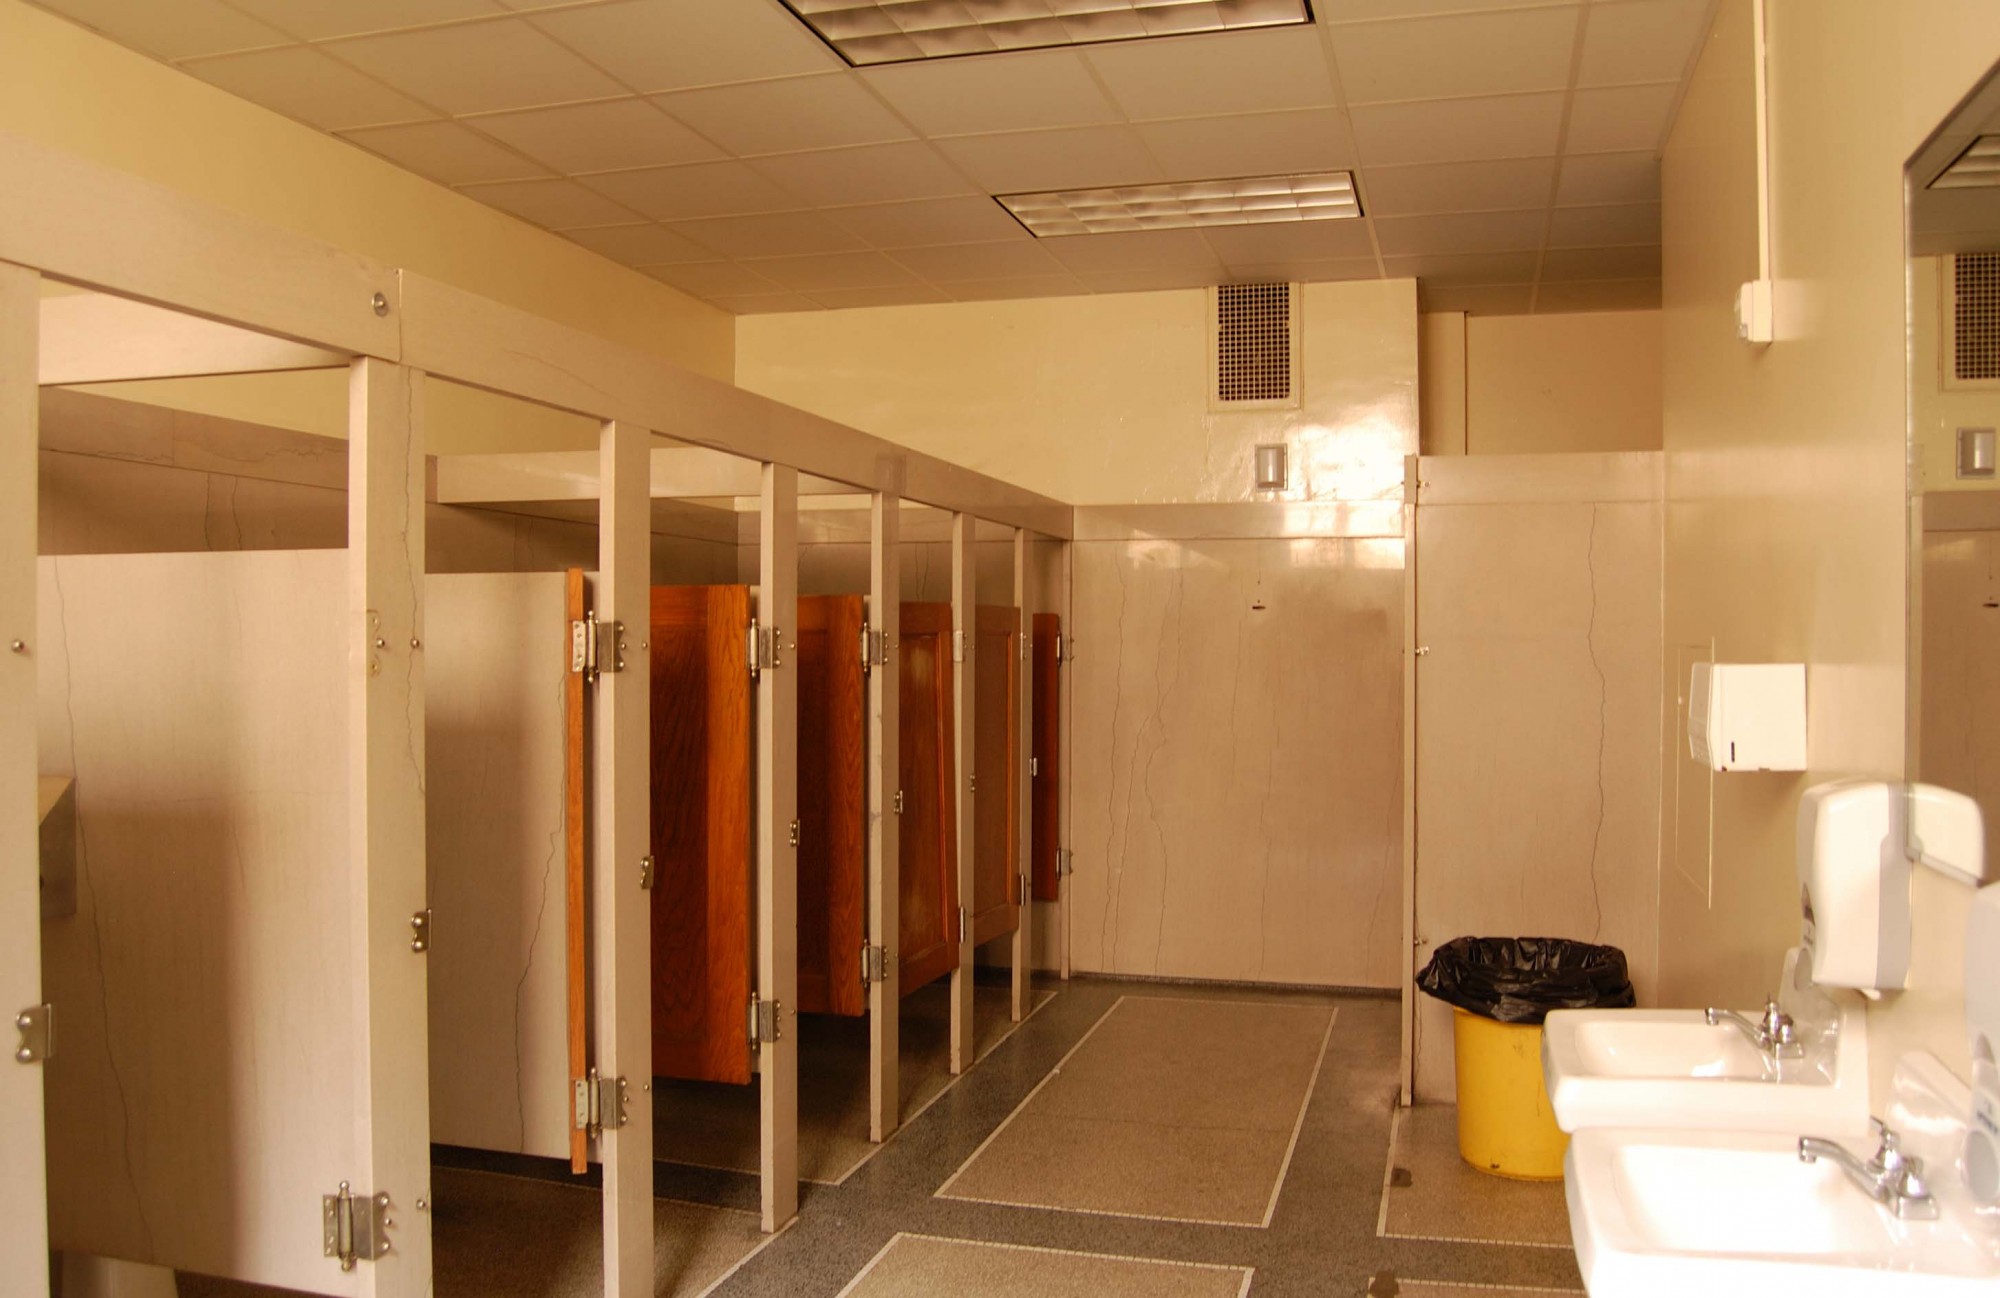 Iroquois Middle School Girls Restroom Second Floor History